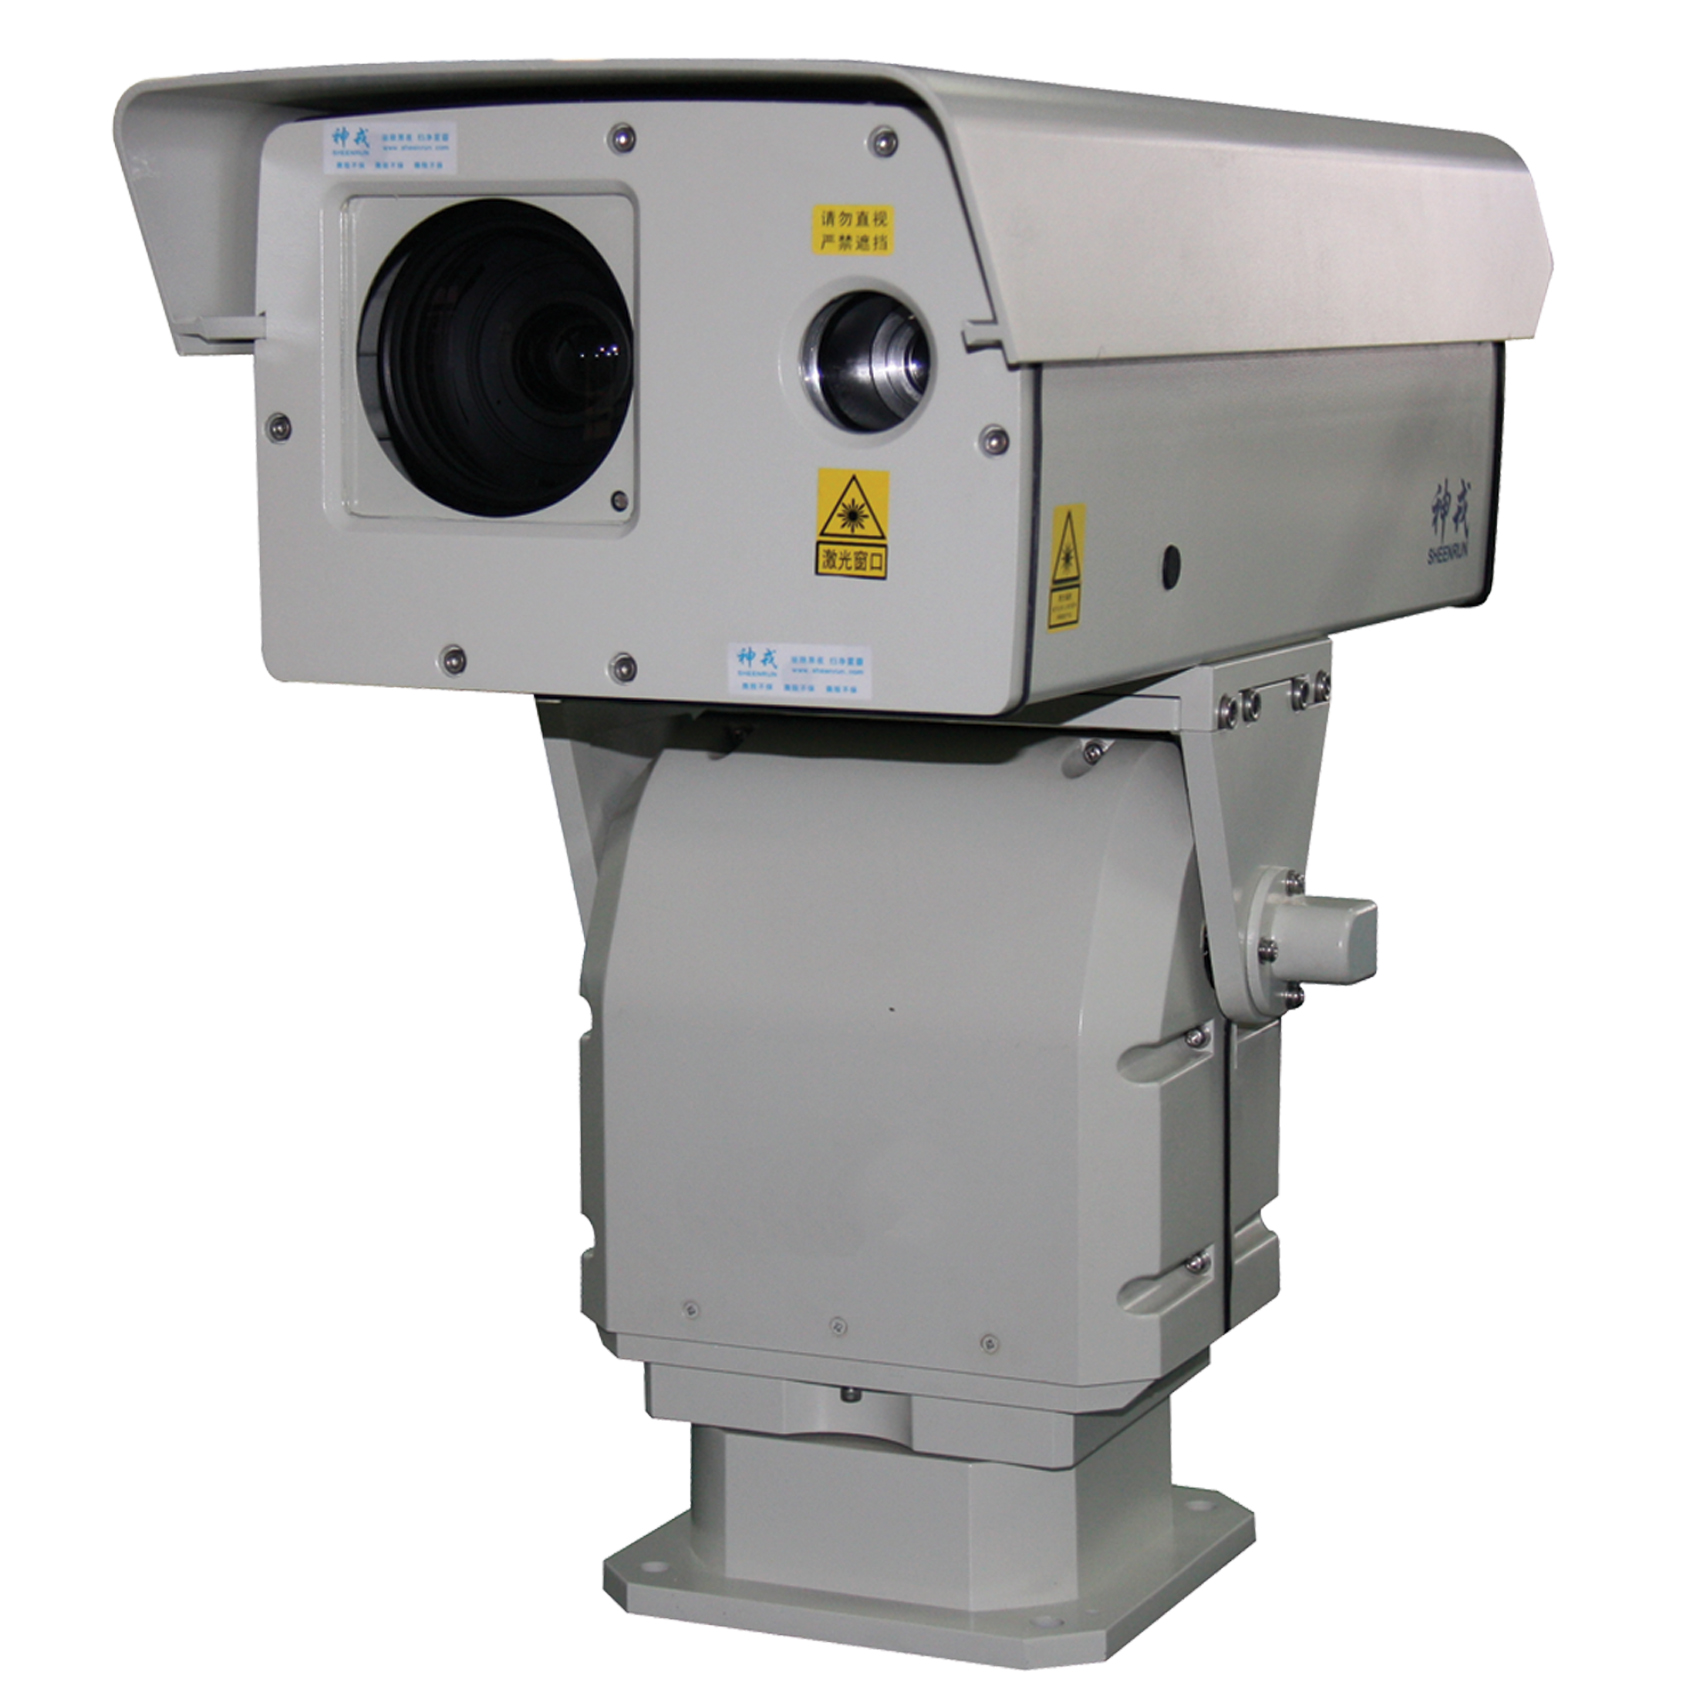 LV510 Middle Range Night Vision Camera